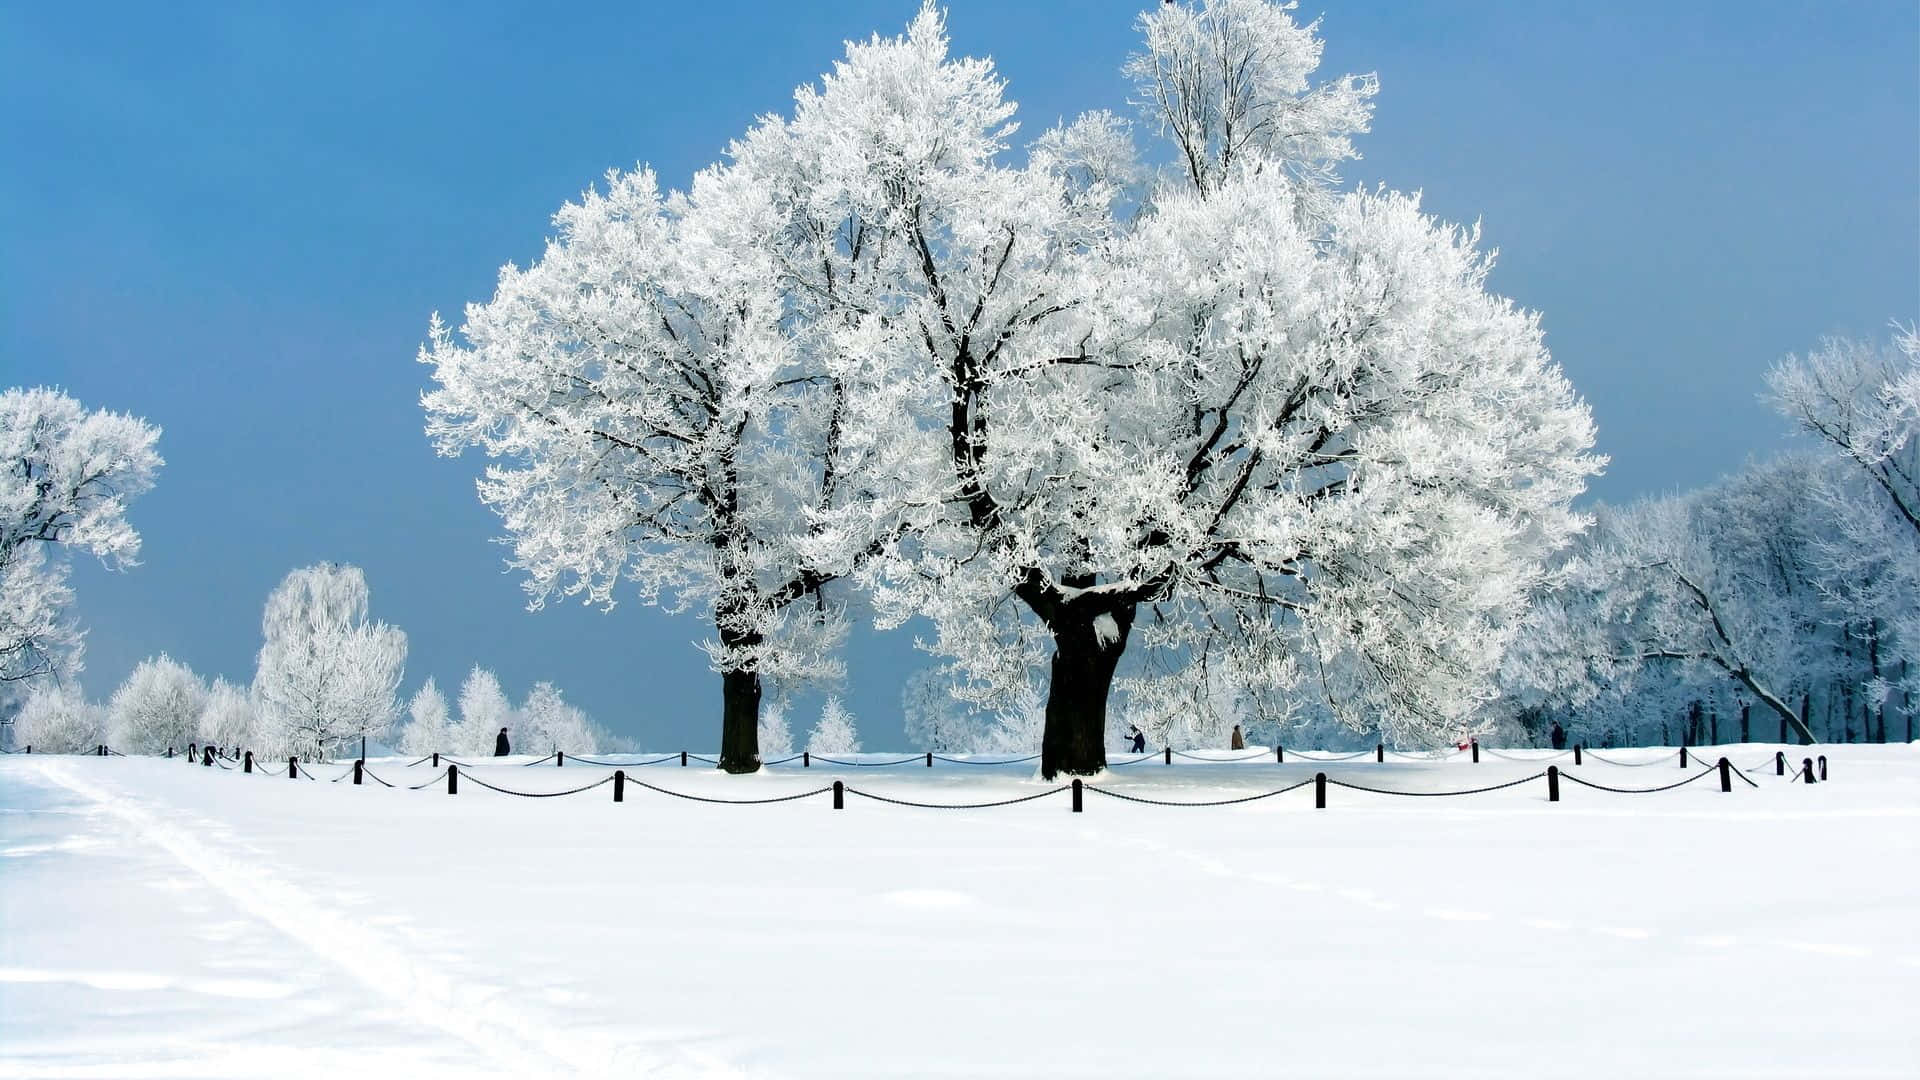 New Hampshire Winter Tree Scenery Wallpaper